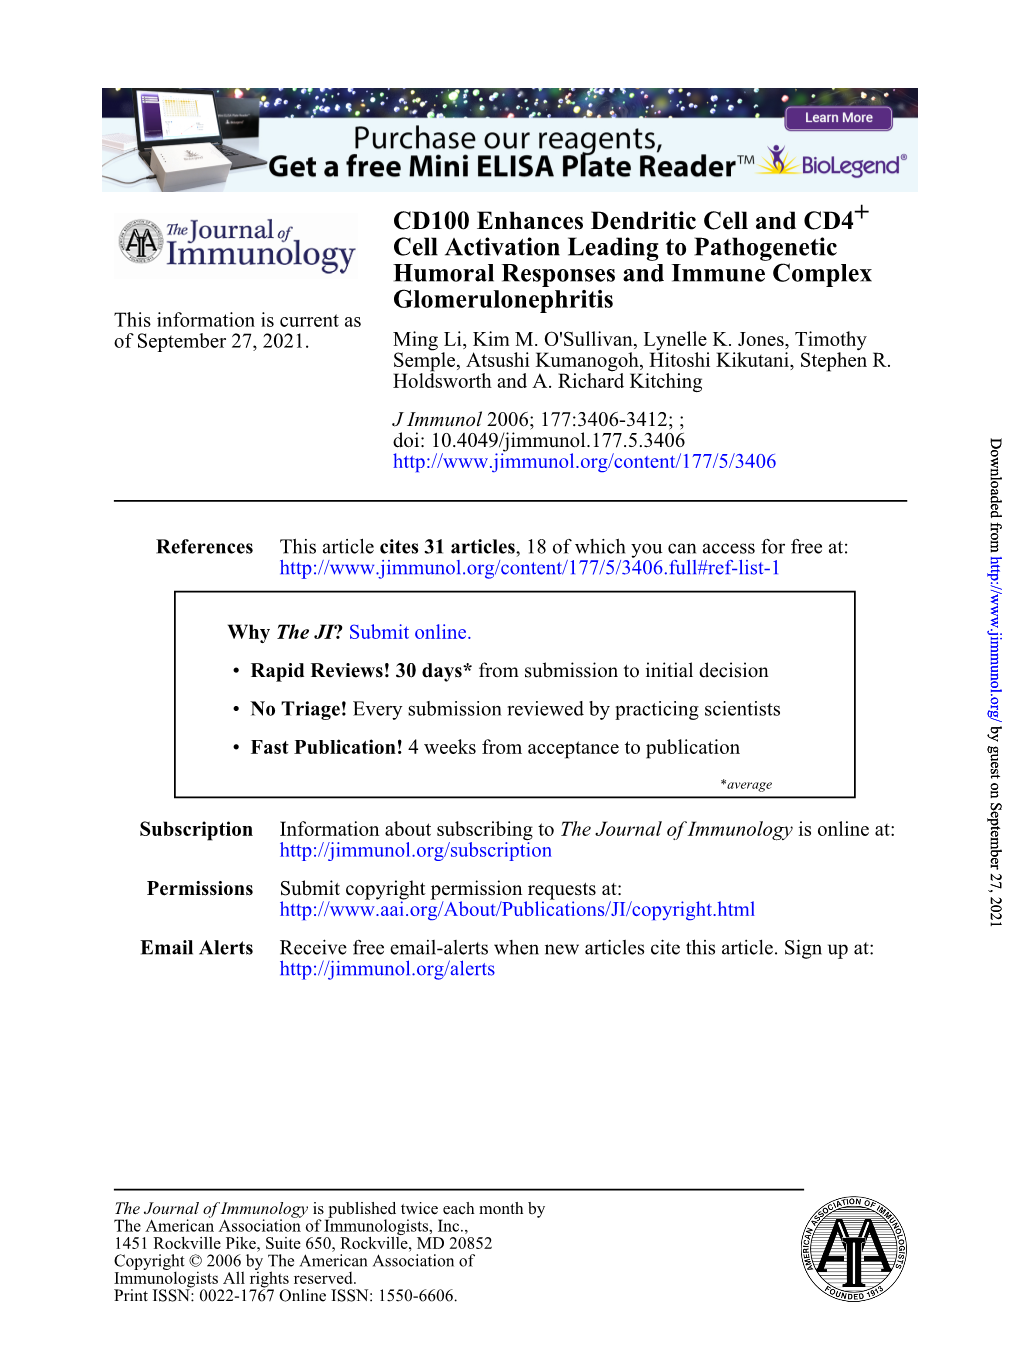 Glomerulonephritis Humoral Responses and Immune Complex